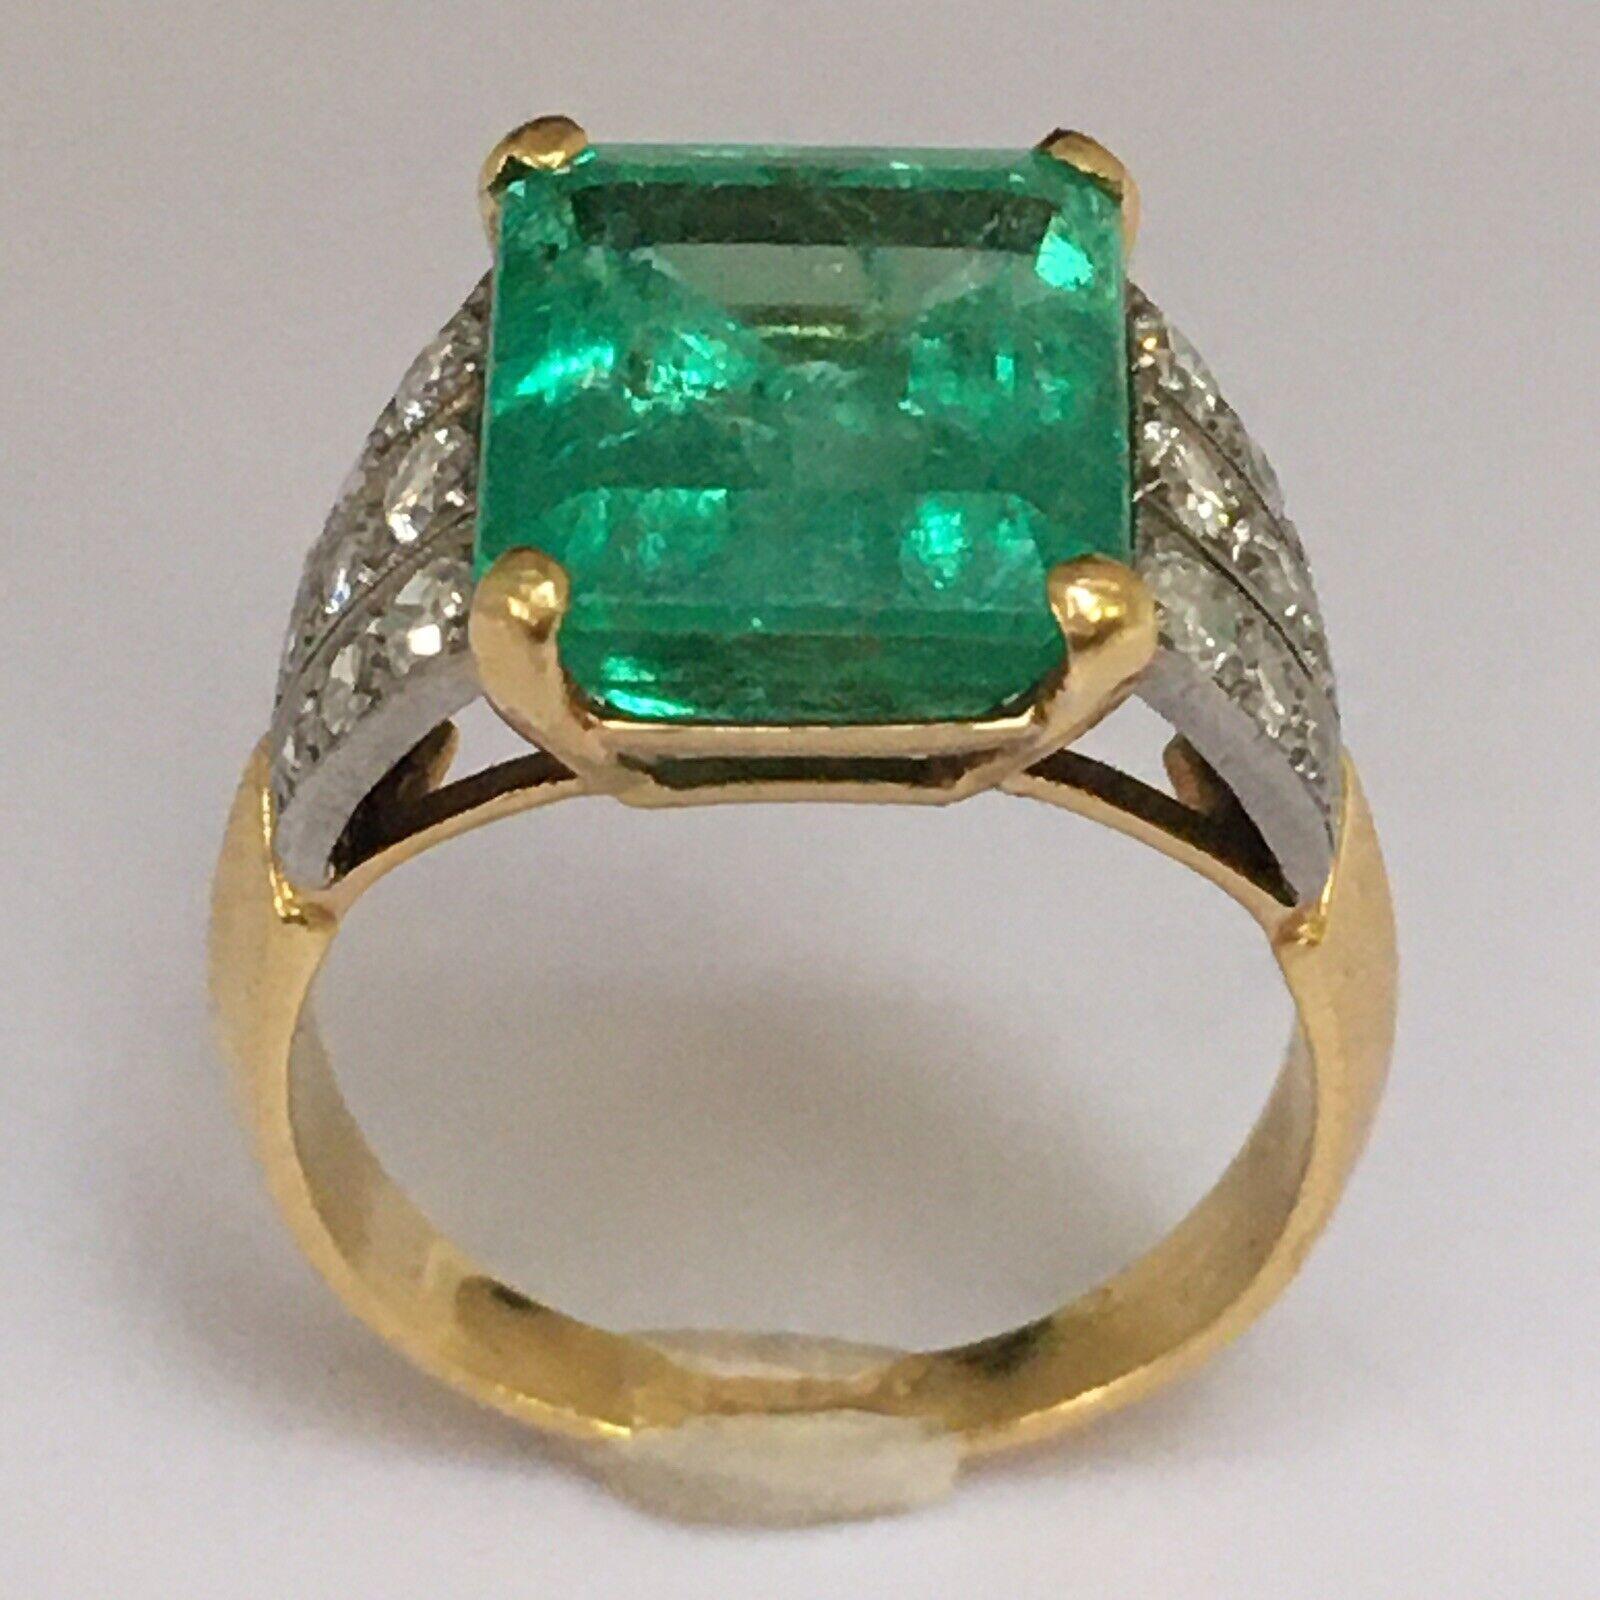 For Sale:  Edwardian 1900s Antique 6 Carat Colombian Emerald Diamond 18K Ring Size 7.5 2